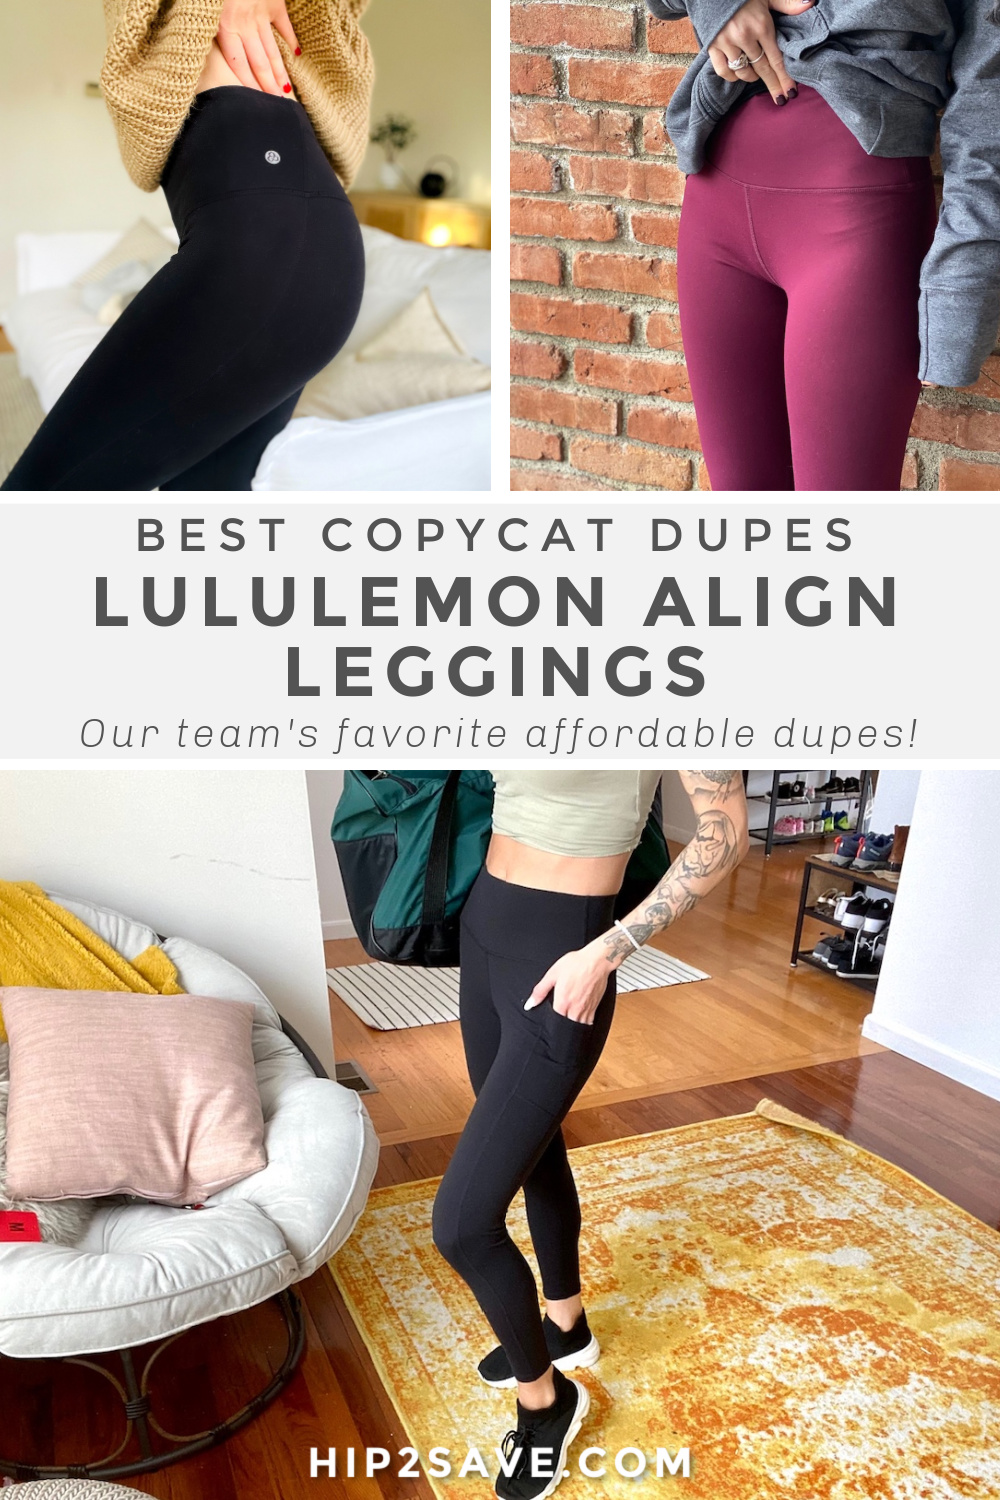 Are Kirkland Signature Leggings Made by Lululemon? - Playbite